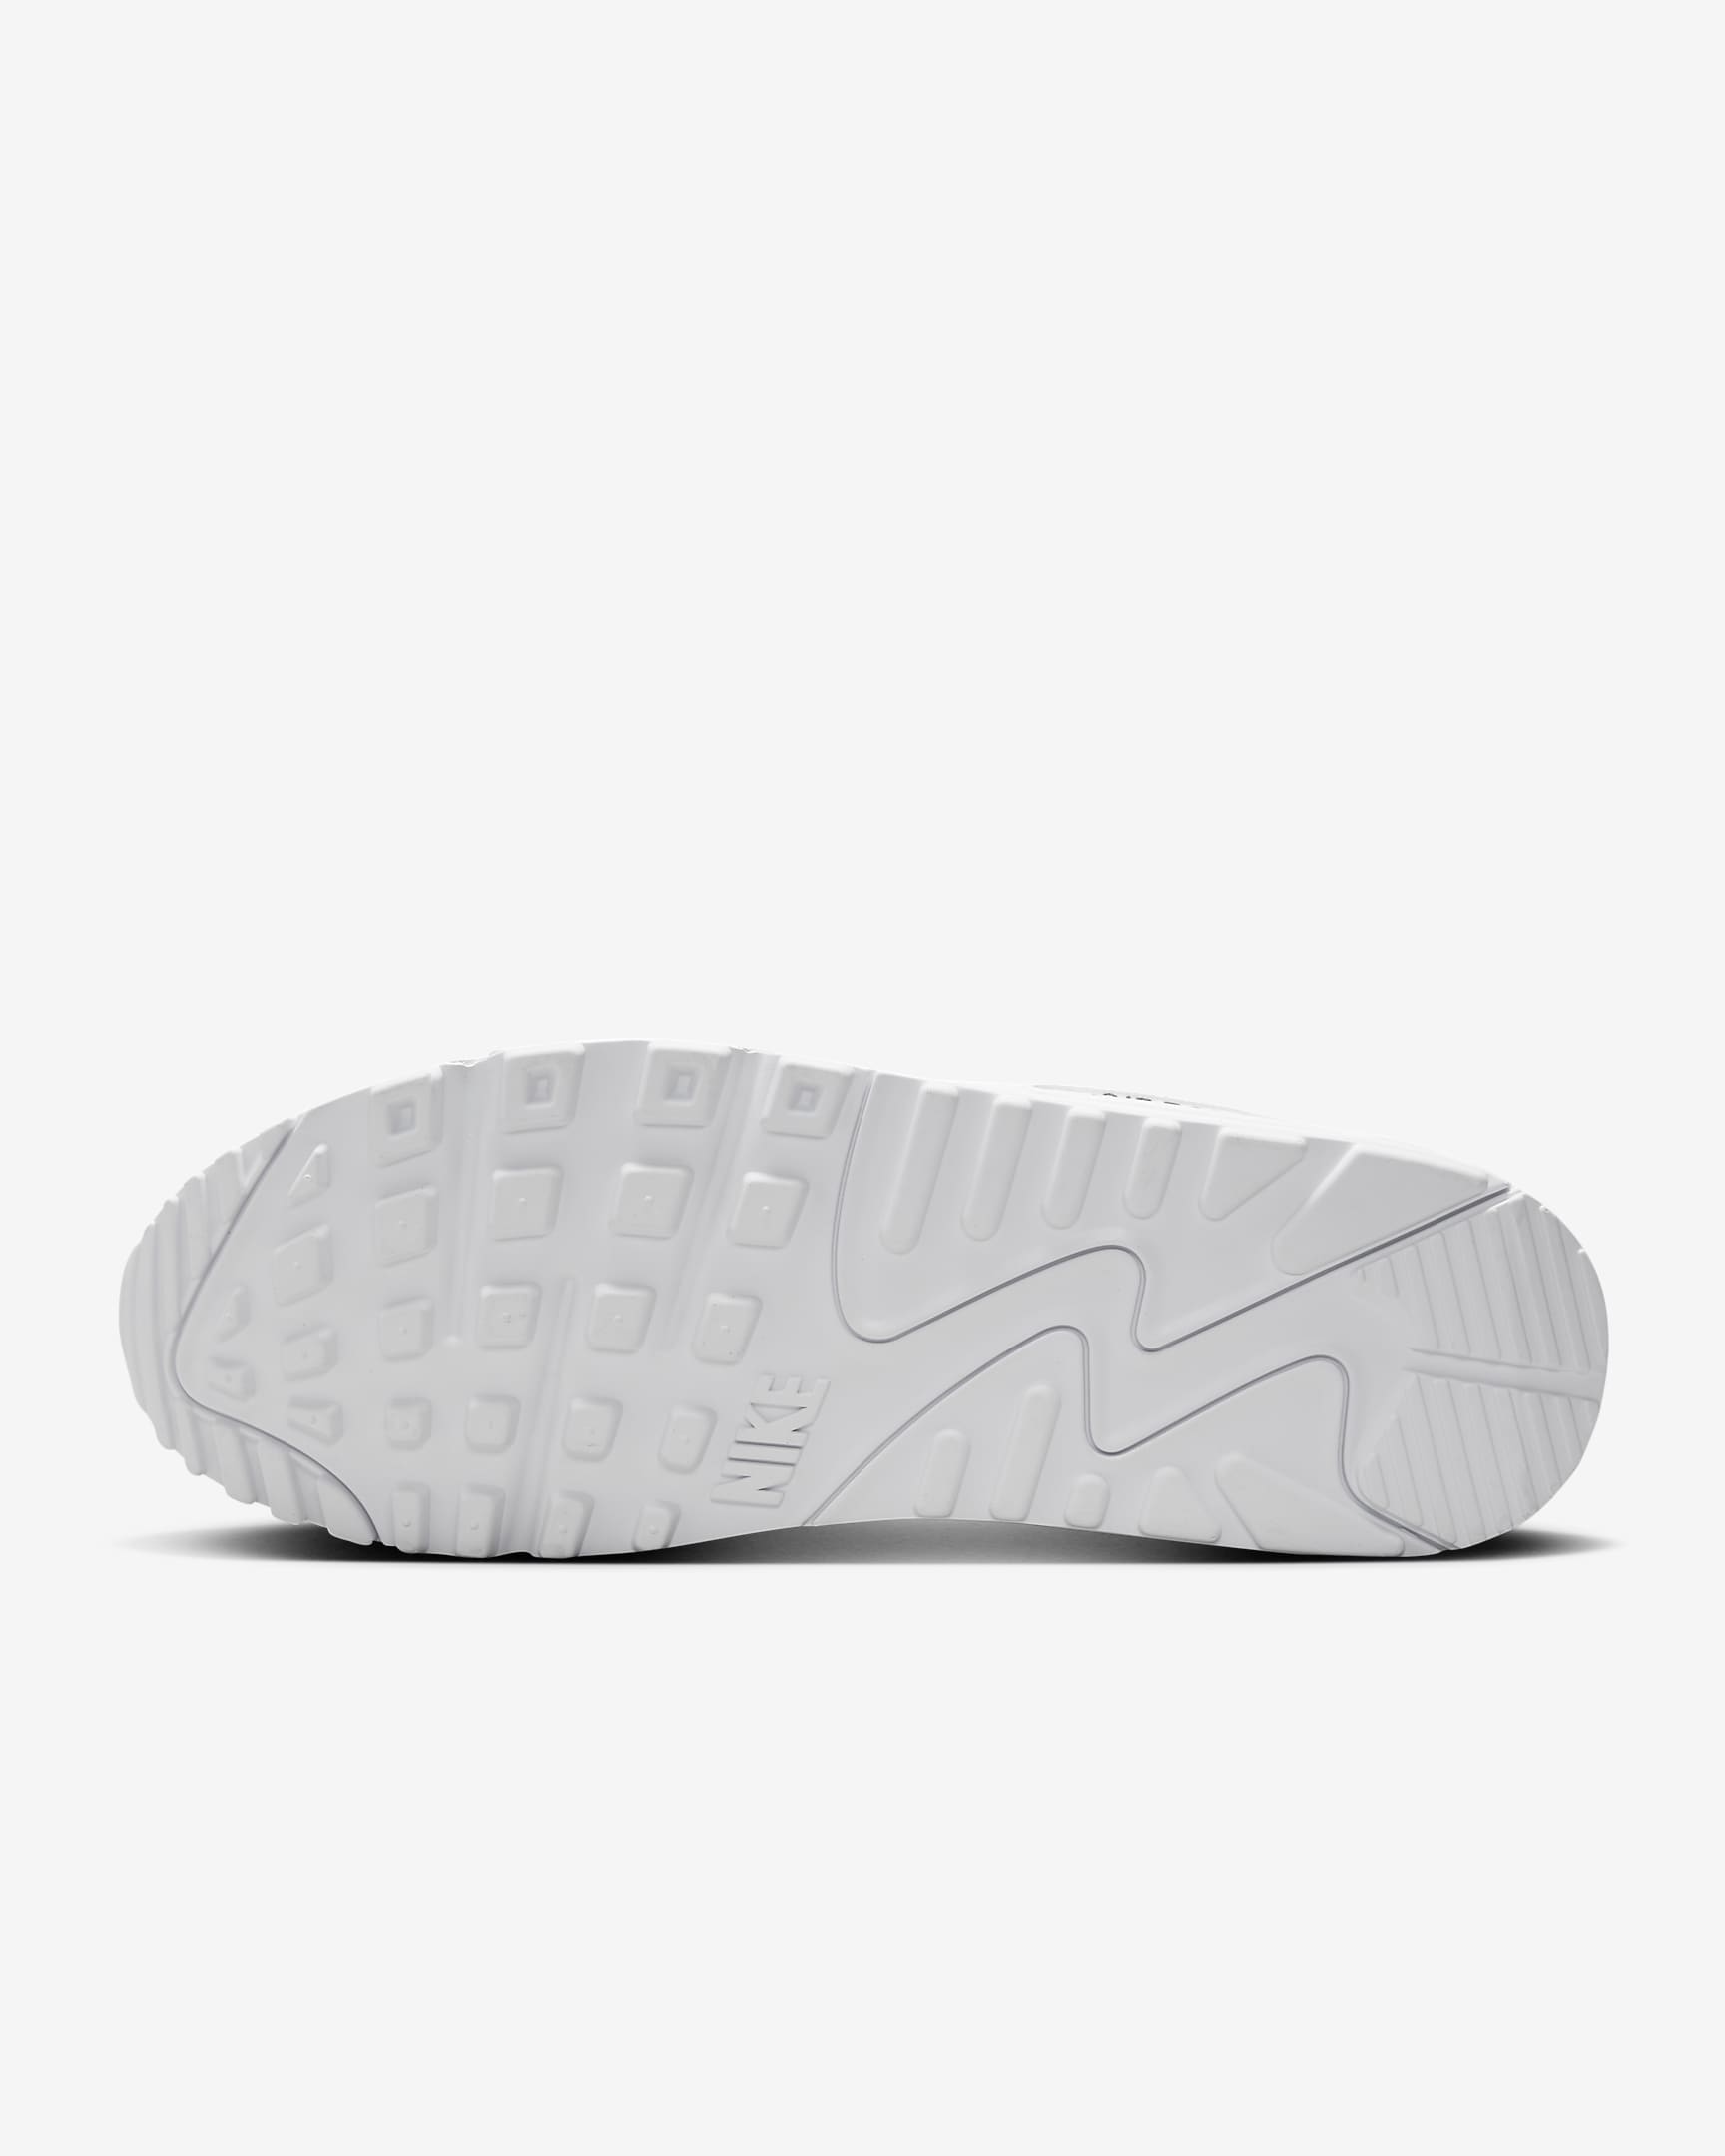 Nike Air Max 90 Men's Shoes - White/Black